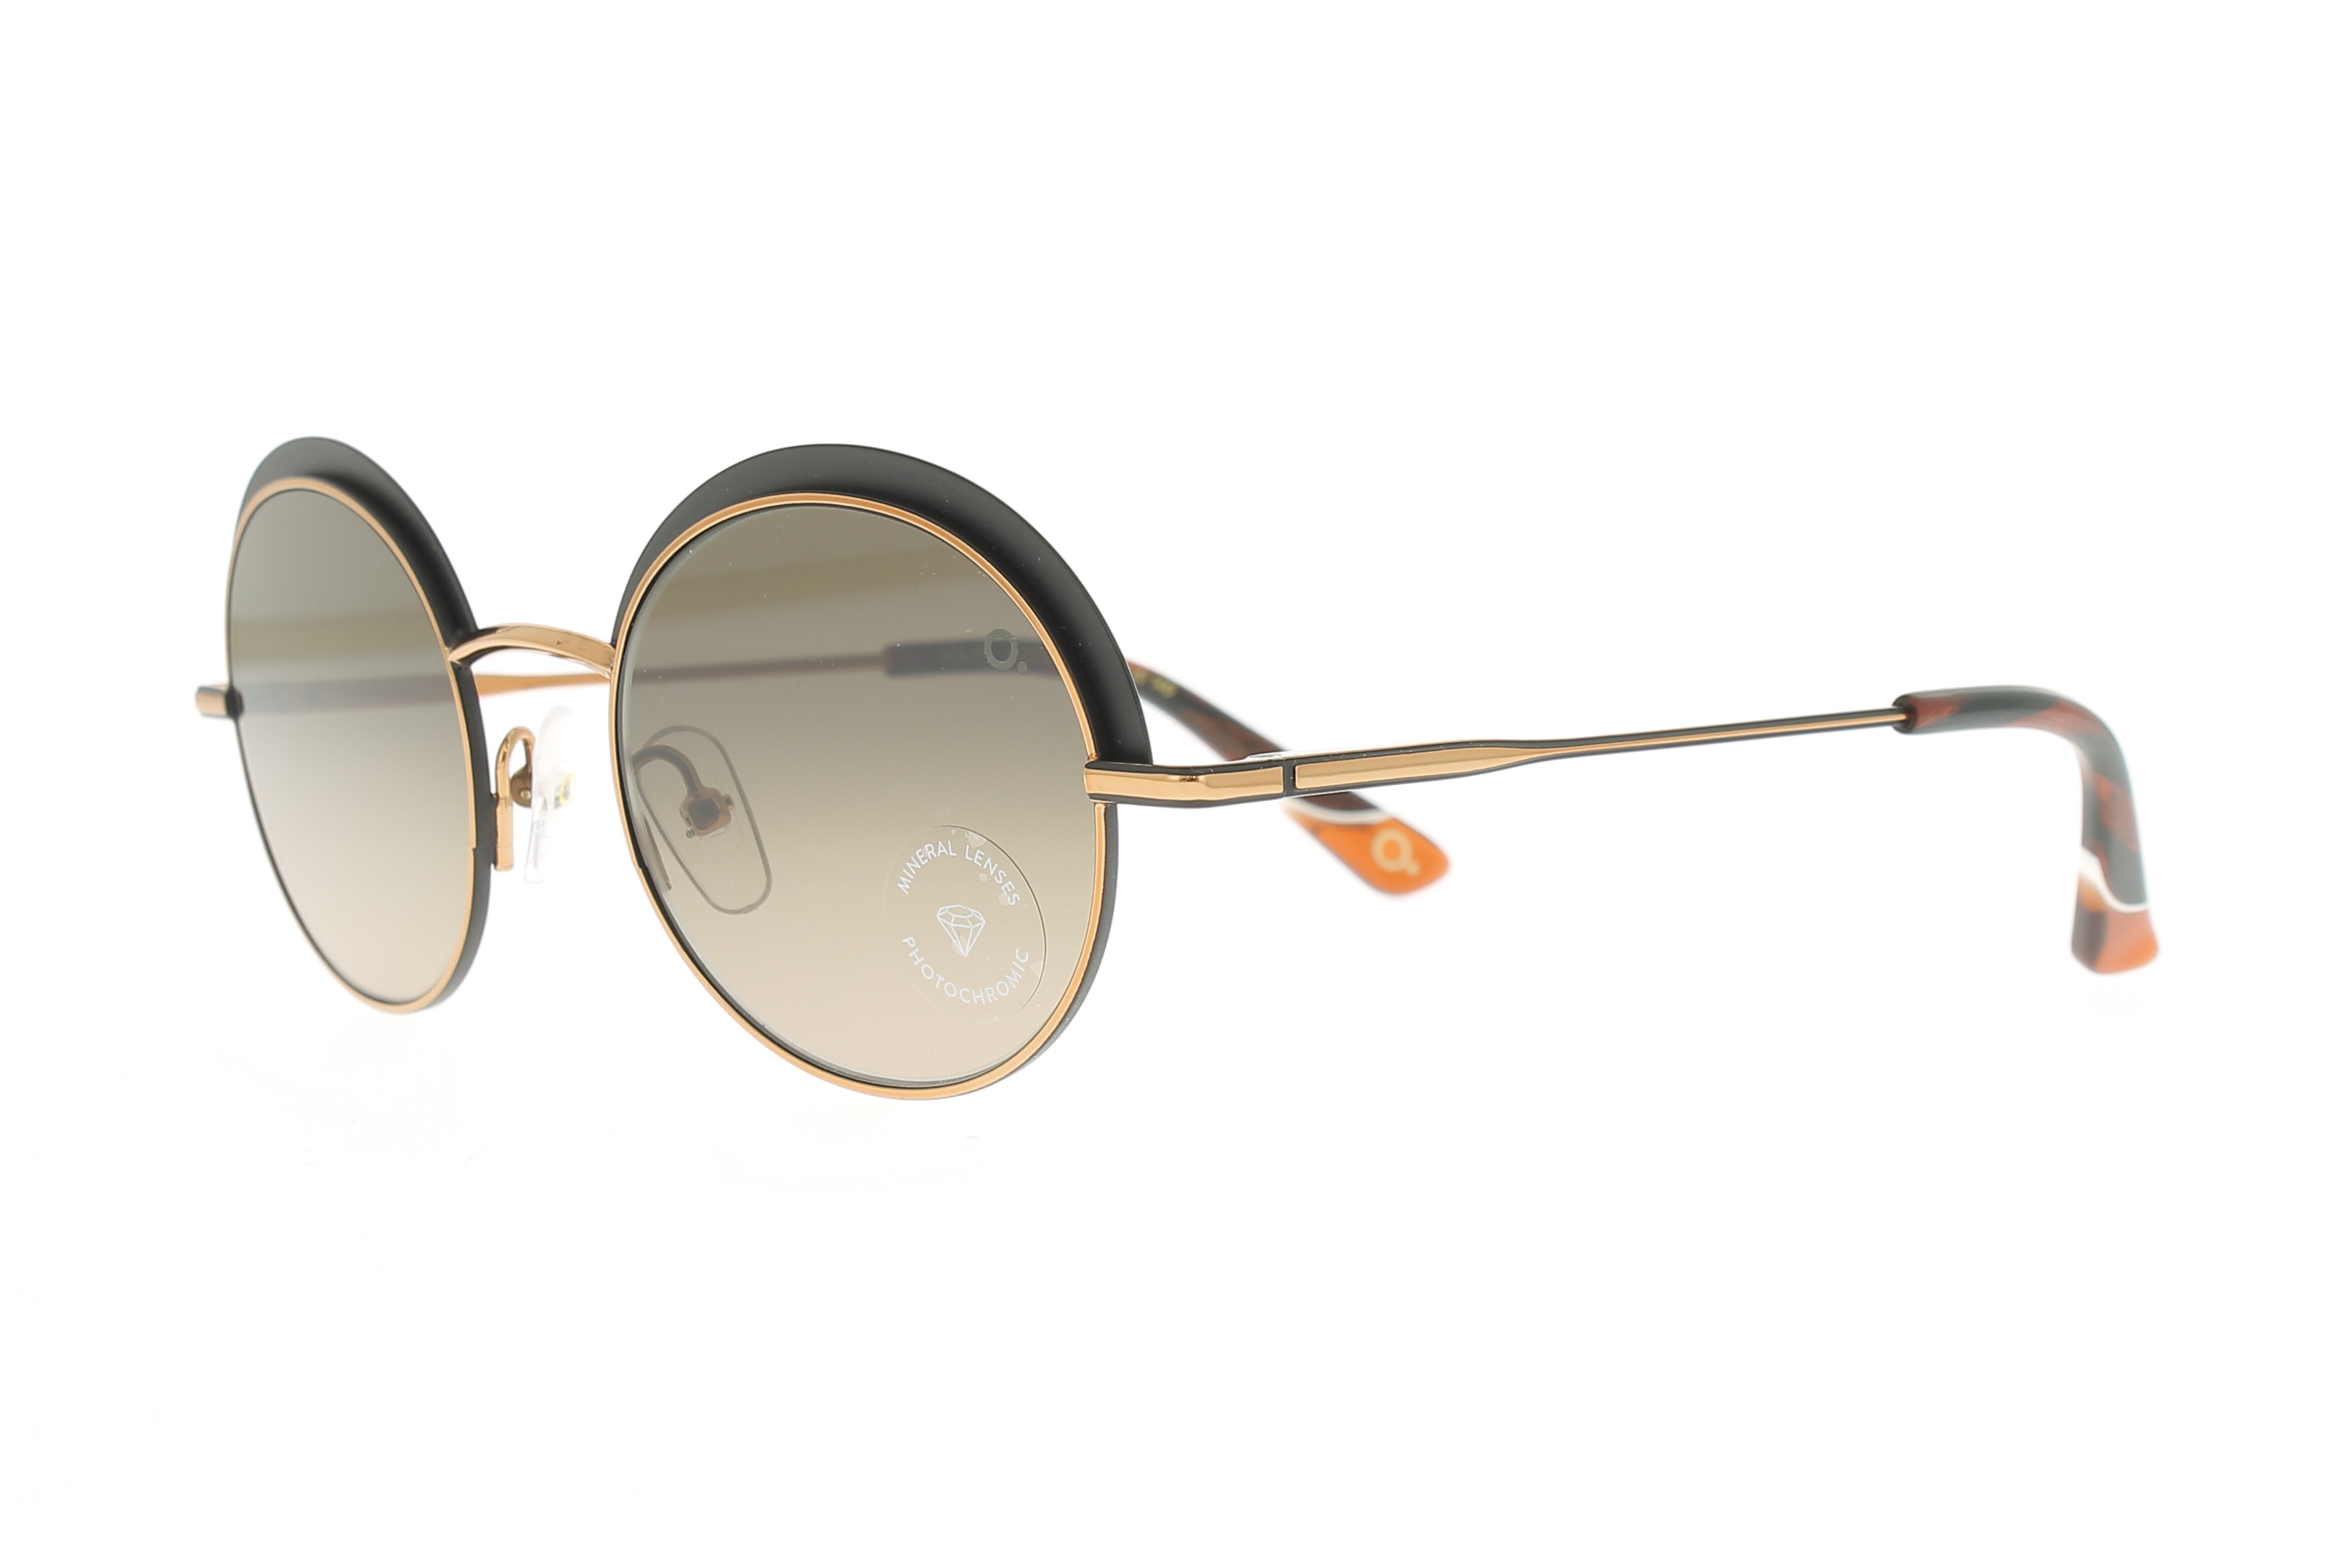 Sunglasses Etnia-barcelona Jolie /s, gun colour - Doyle